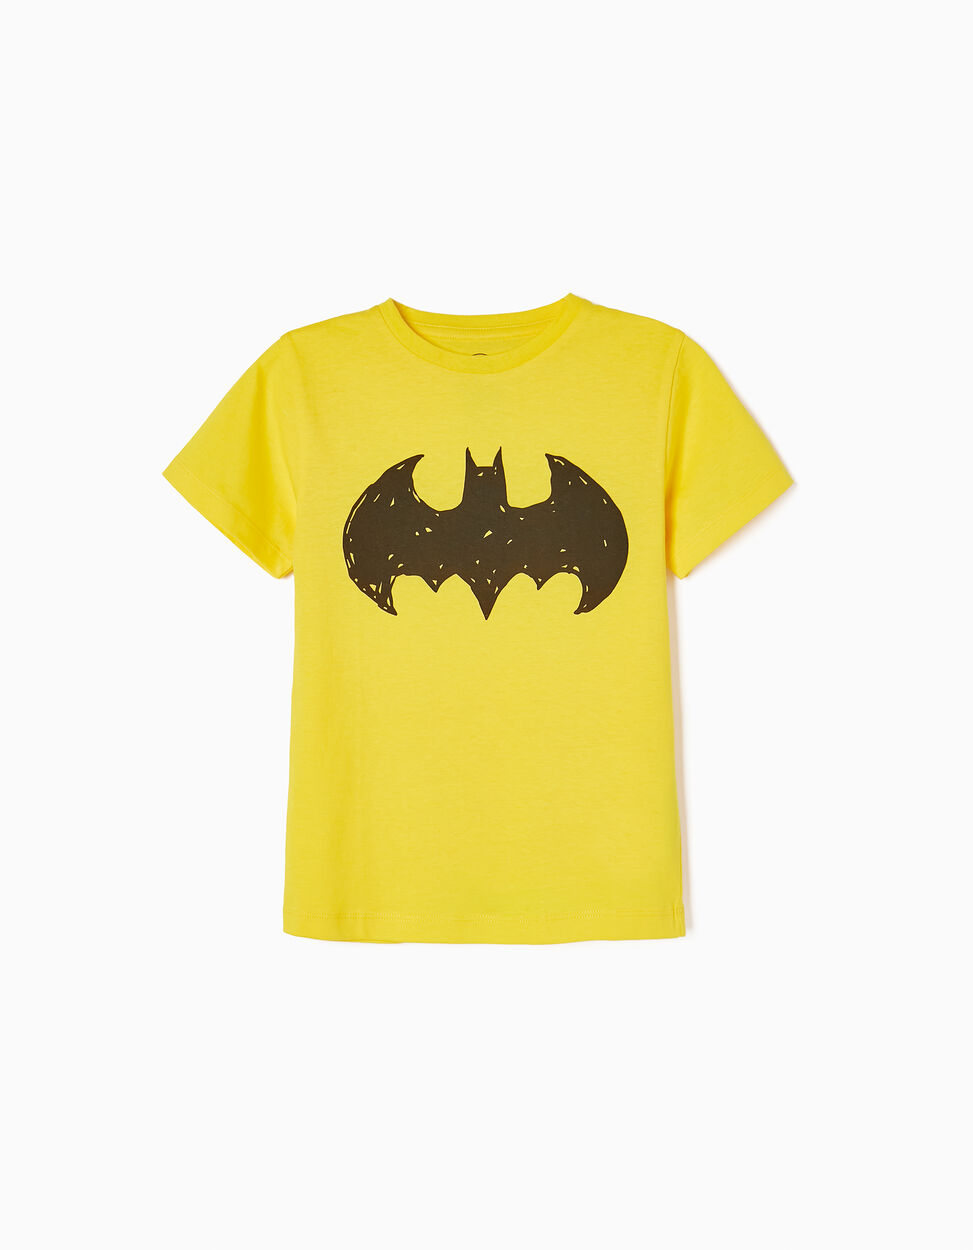 Cotton T-shirt for Boys 'Batman', Yellow | Zippy Online Germany